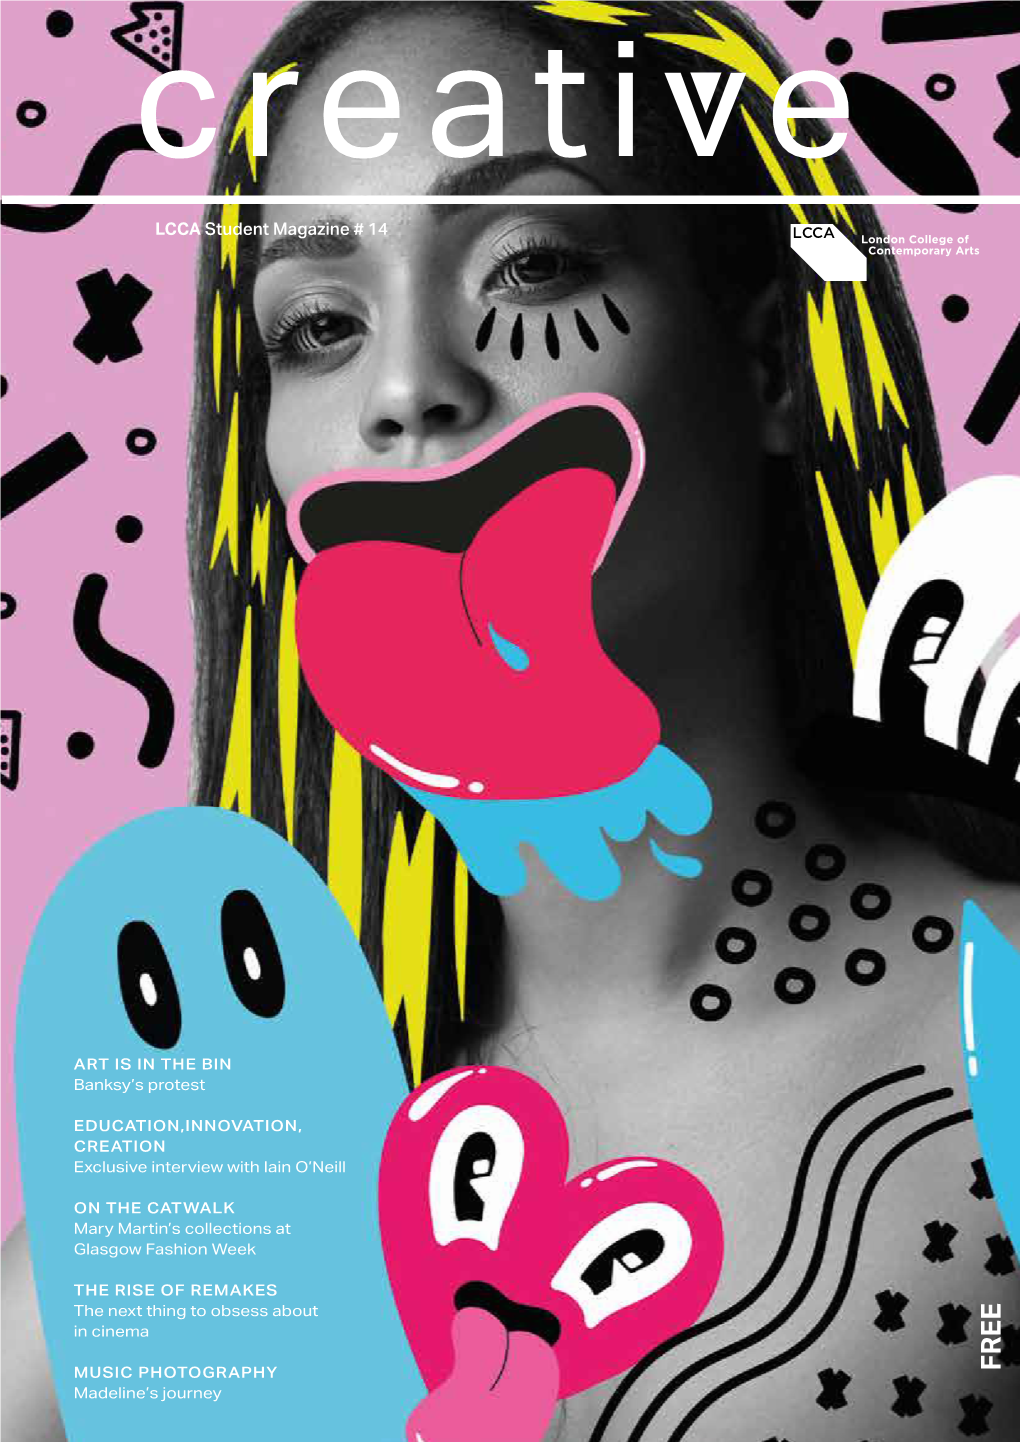 CREATIVE MAGAZINE | 1 LCCA Student Magazine # 14